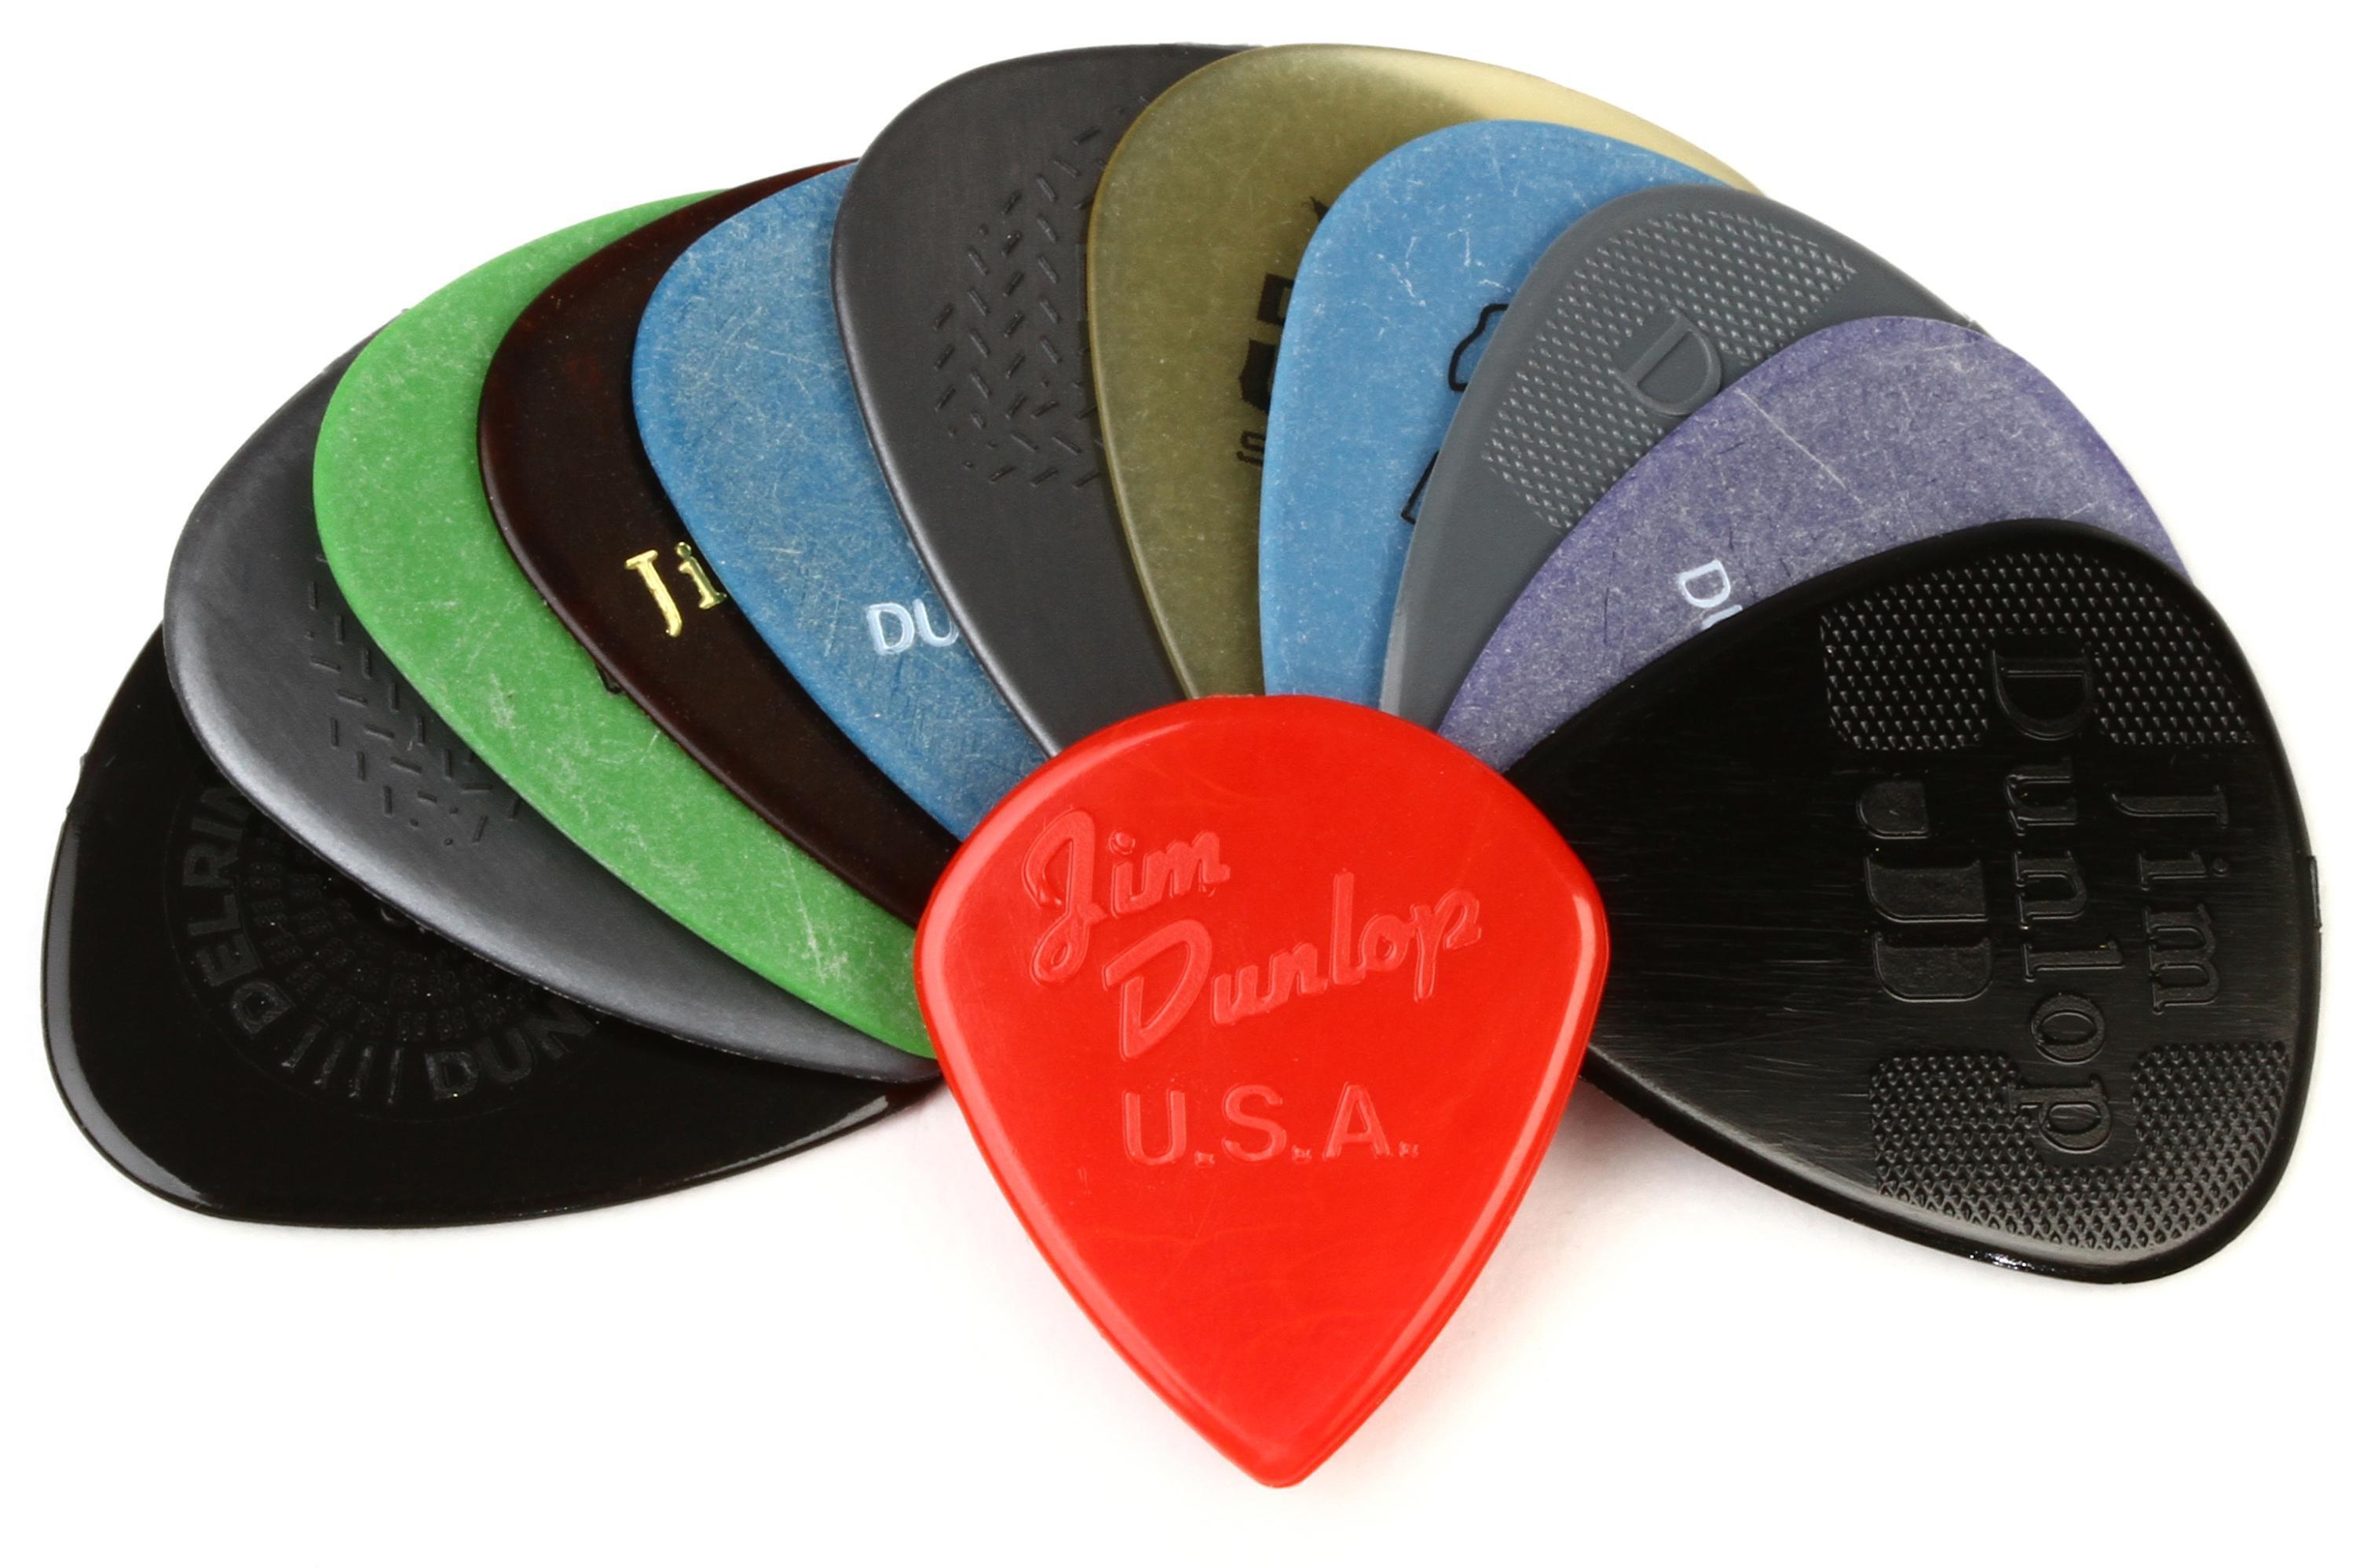 Dunlop PVP102 Guitar Pick Variety Pack - Medium/Heavy (12-pack)